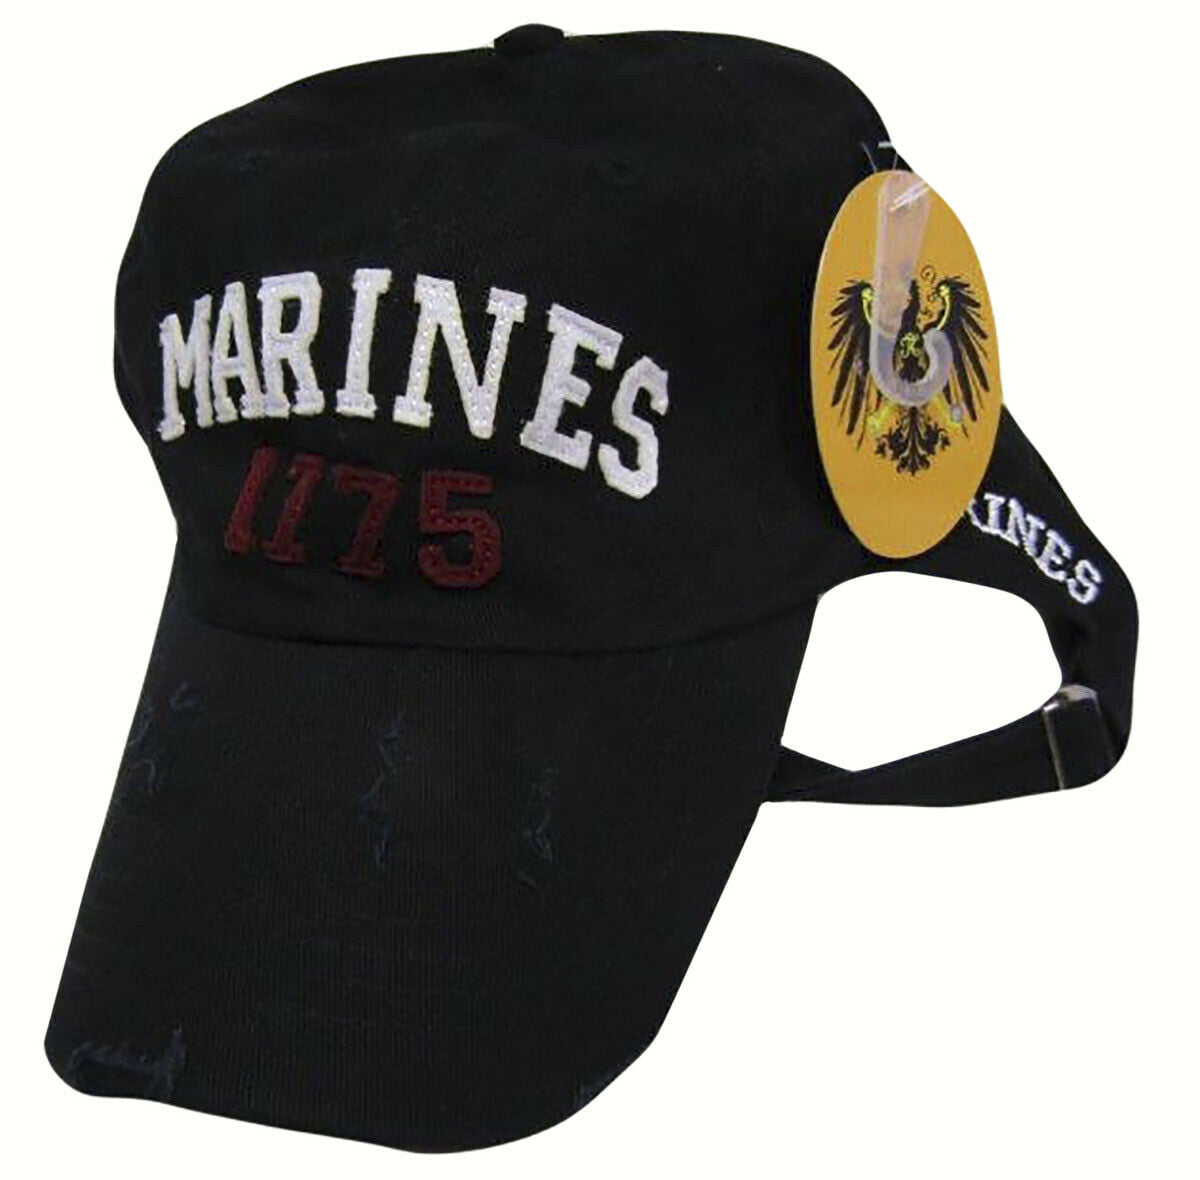 Embroidered Distressed Style Black U.S Marines USMC Marine 1775 Cap Hat Cover 